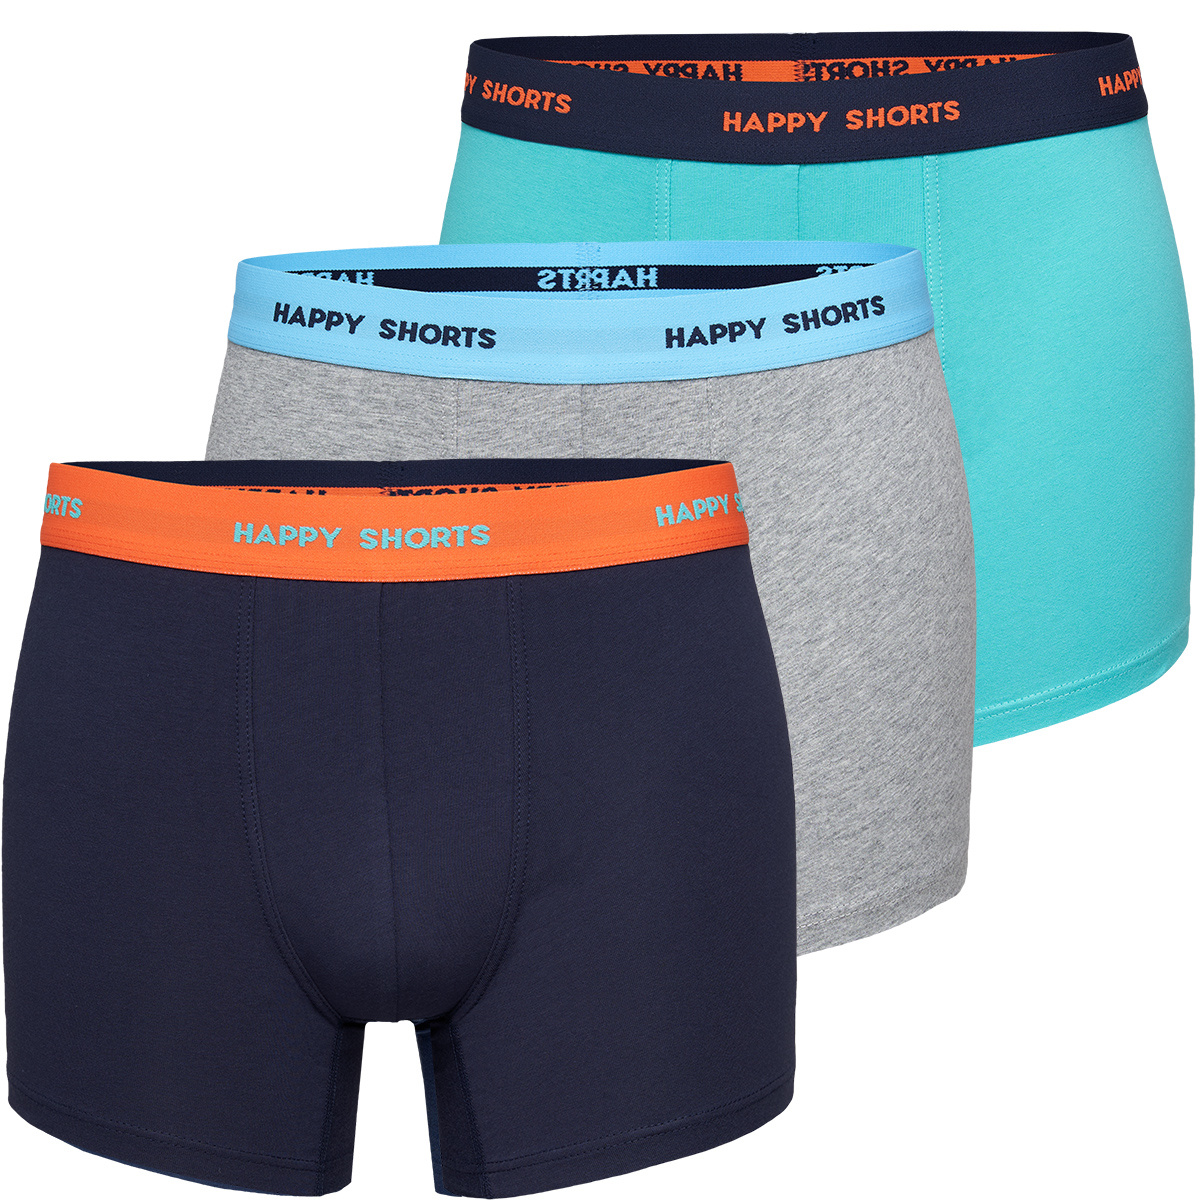 Happy Shorts Boxer Shorts Men Multipack 6-Pack NEON SET#8